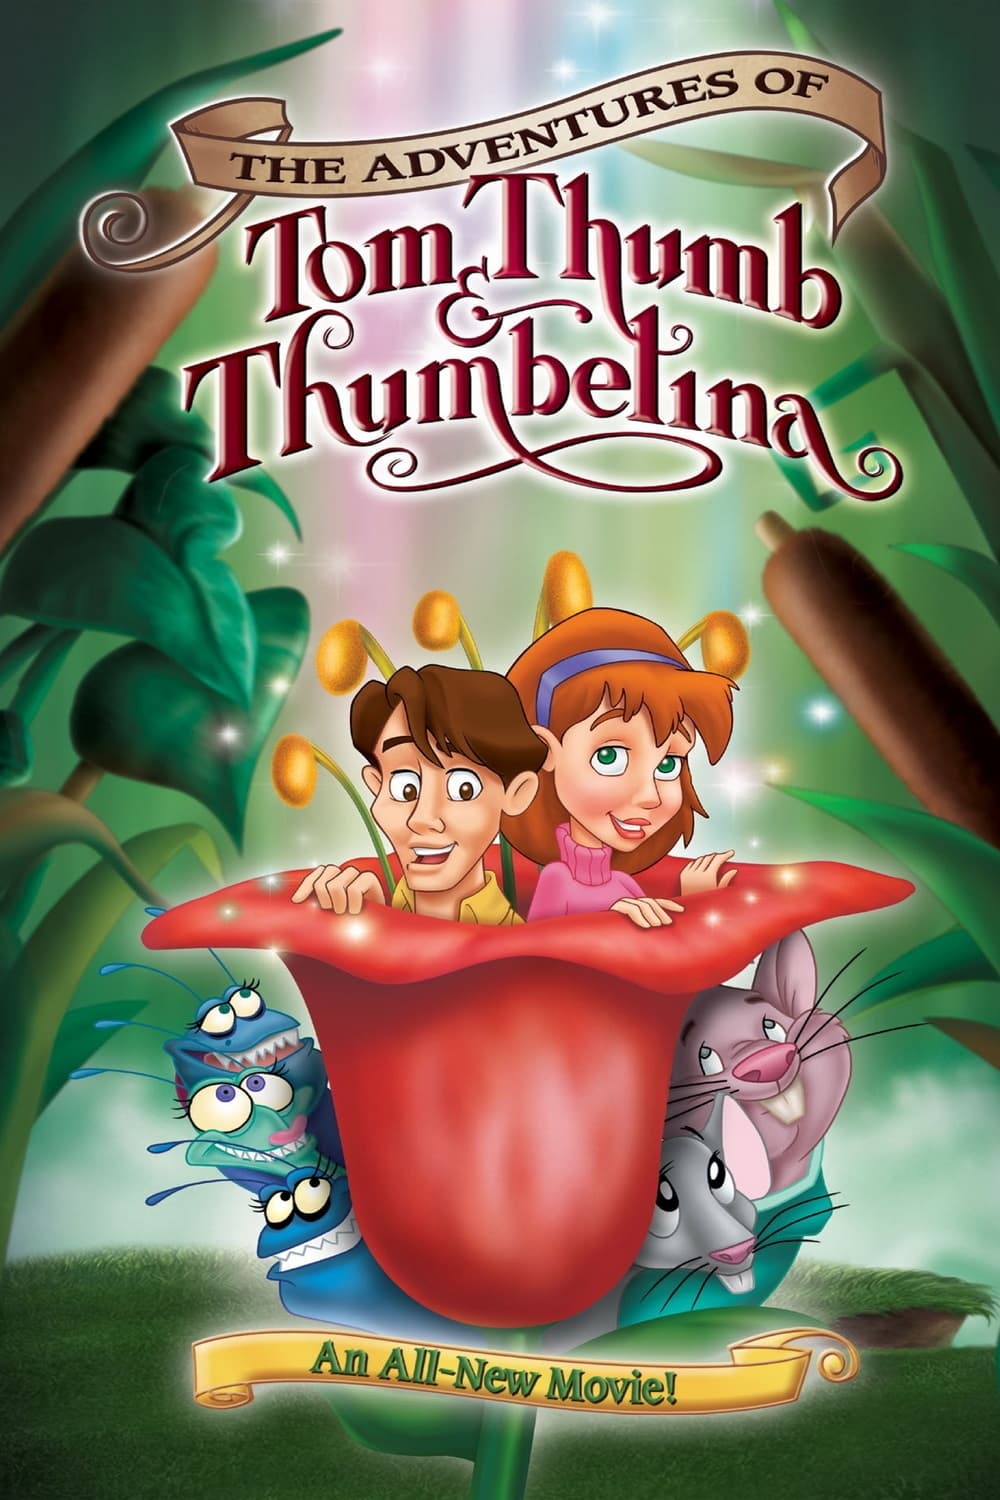 The Adventures of Tom Thumb & Thumbelina